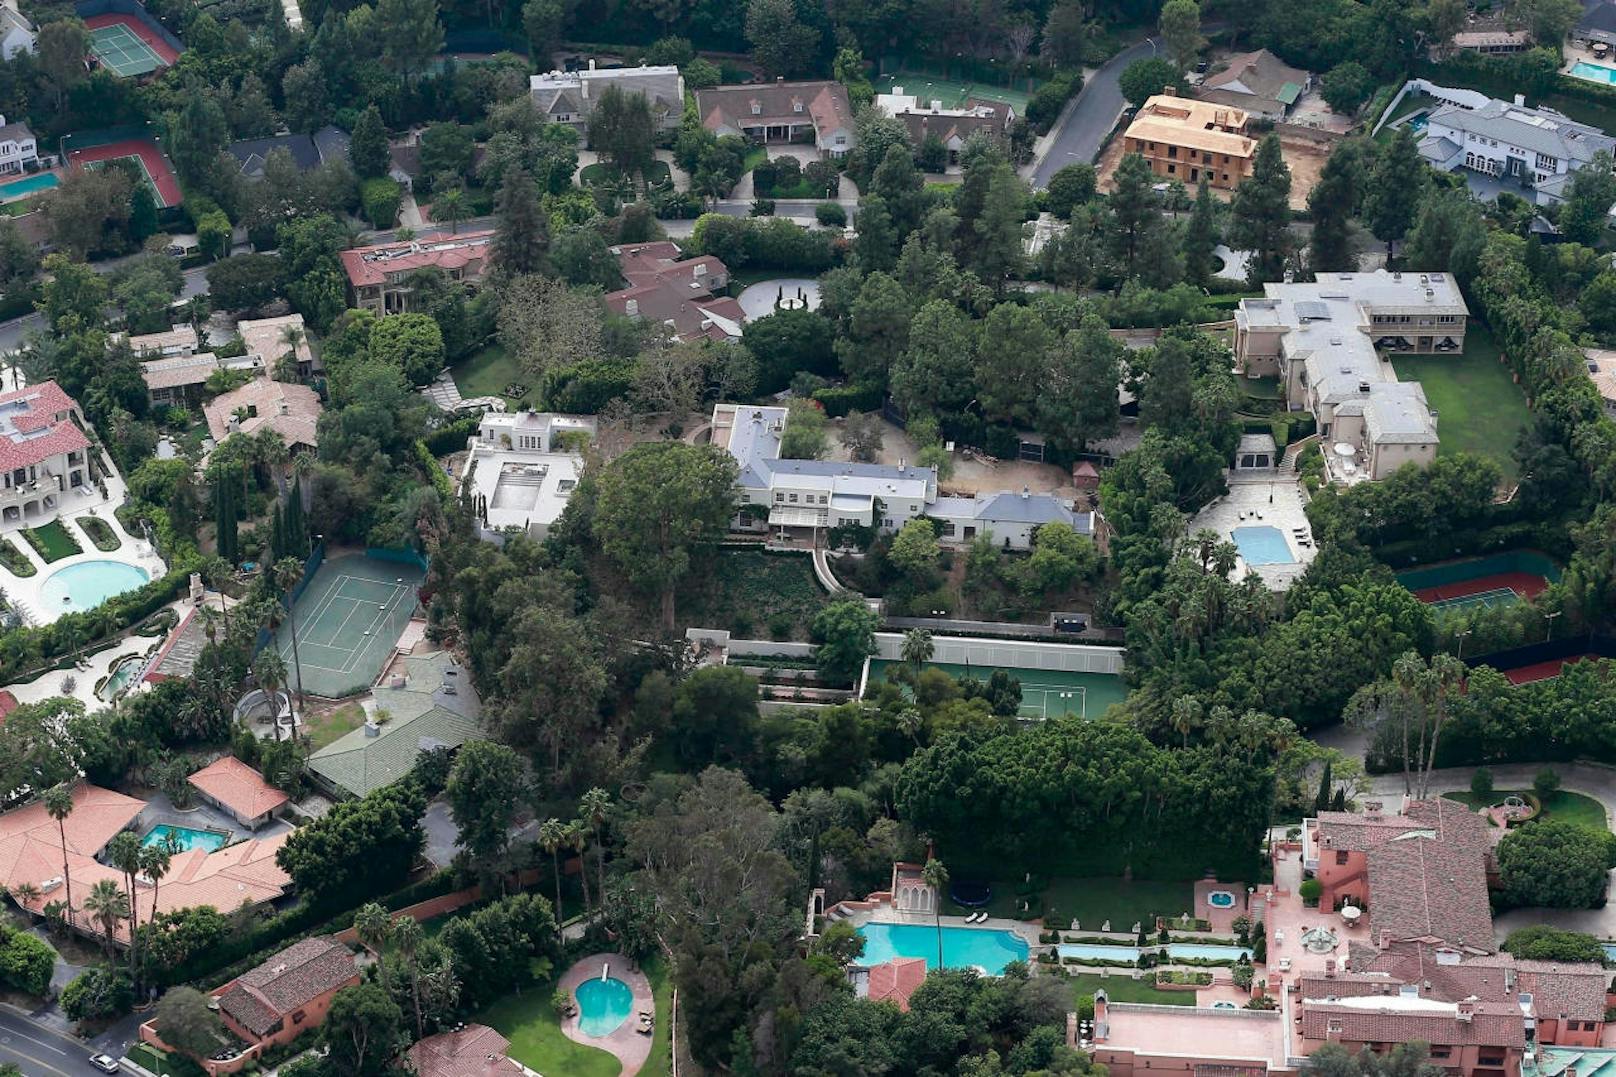 Swifts Villa in Beverly Hills.